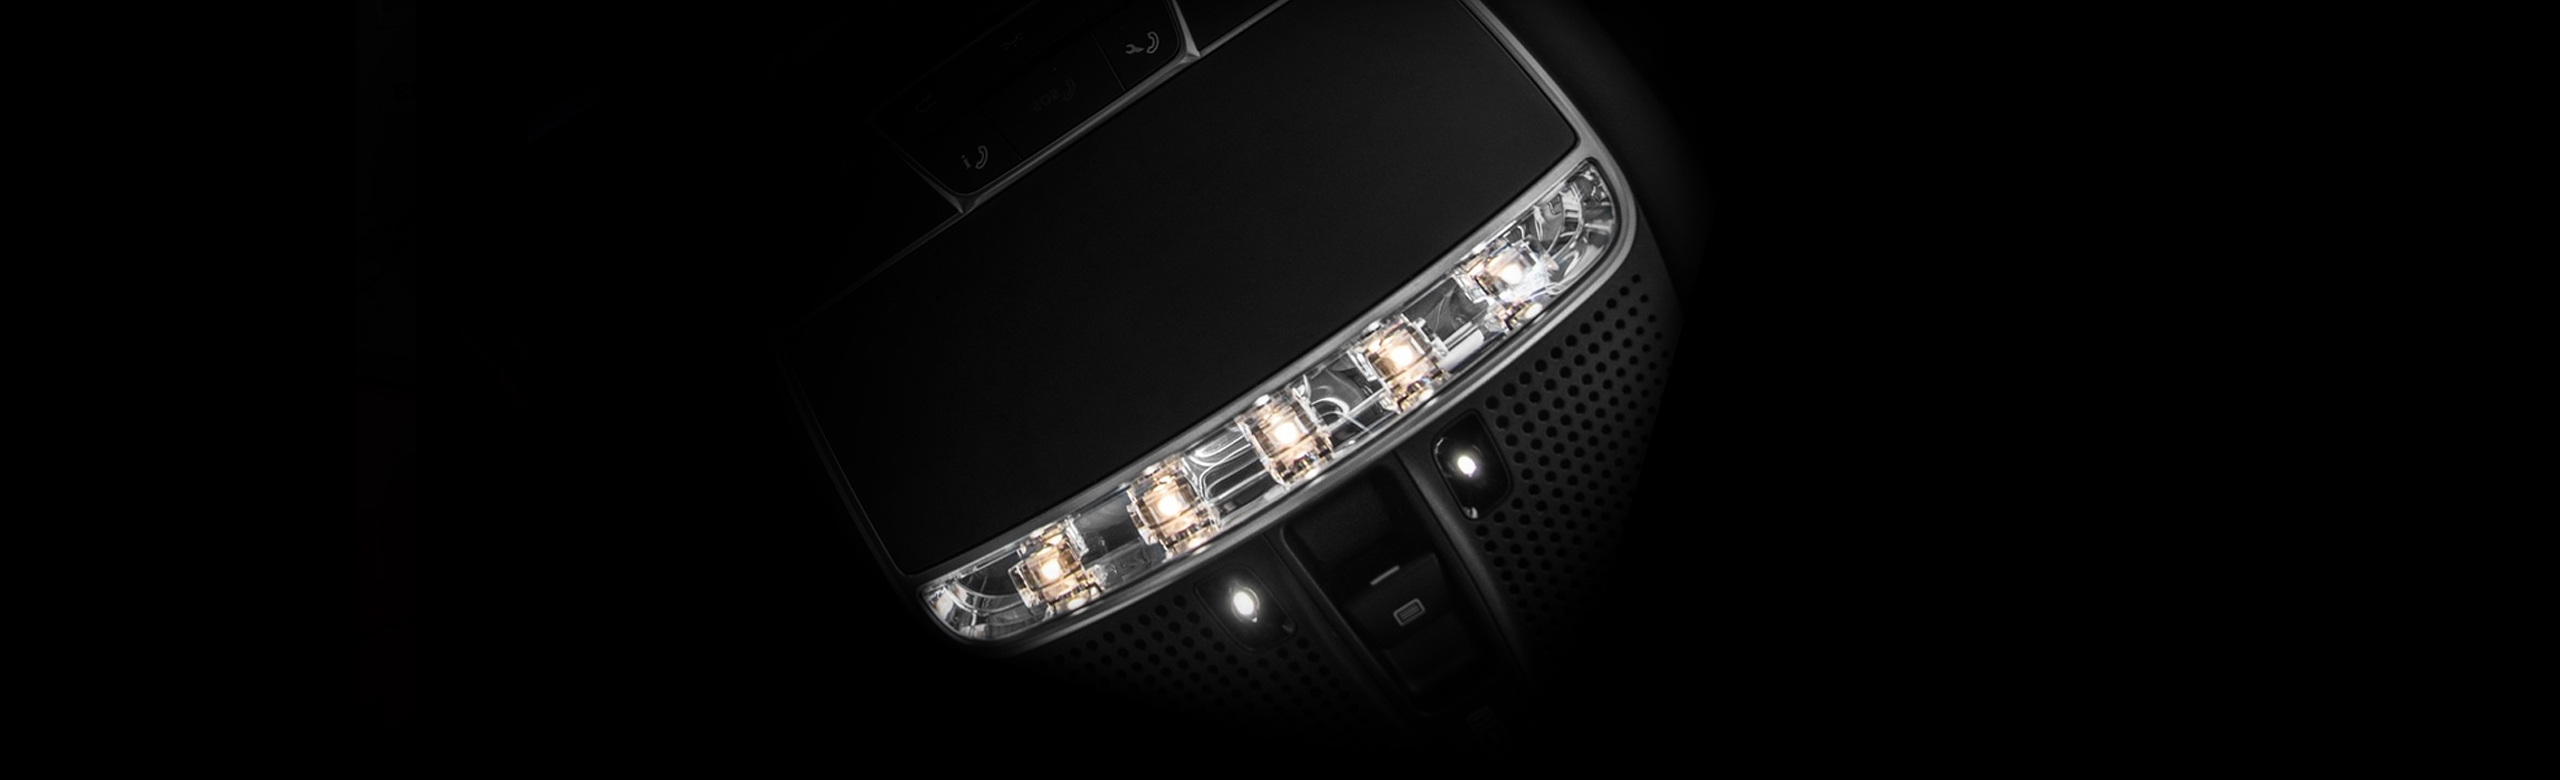 Mercedes Benz Led Interior Lights Delvis Gmbh